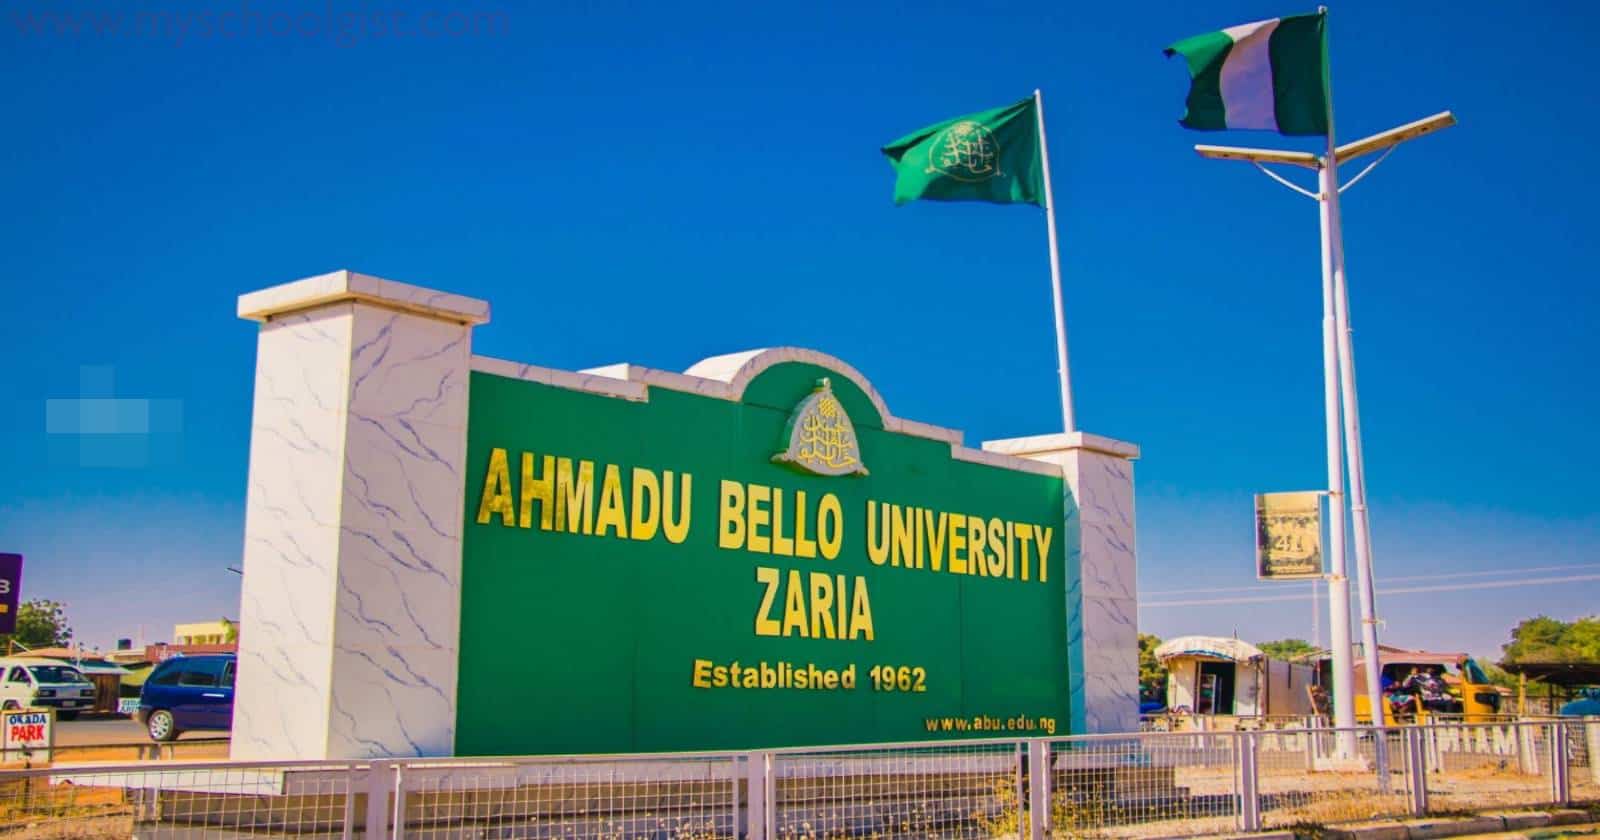 ahmadu-bello-university-abu-revised-academic-calendar-2021-2022-academic-session